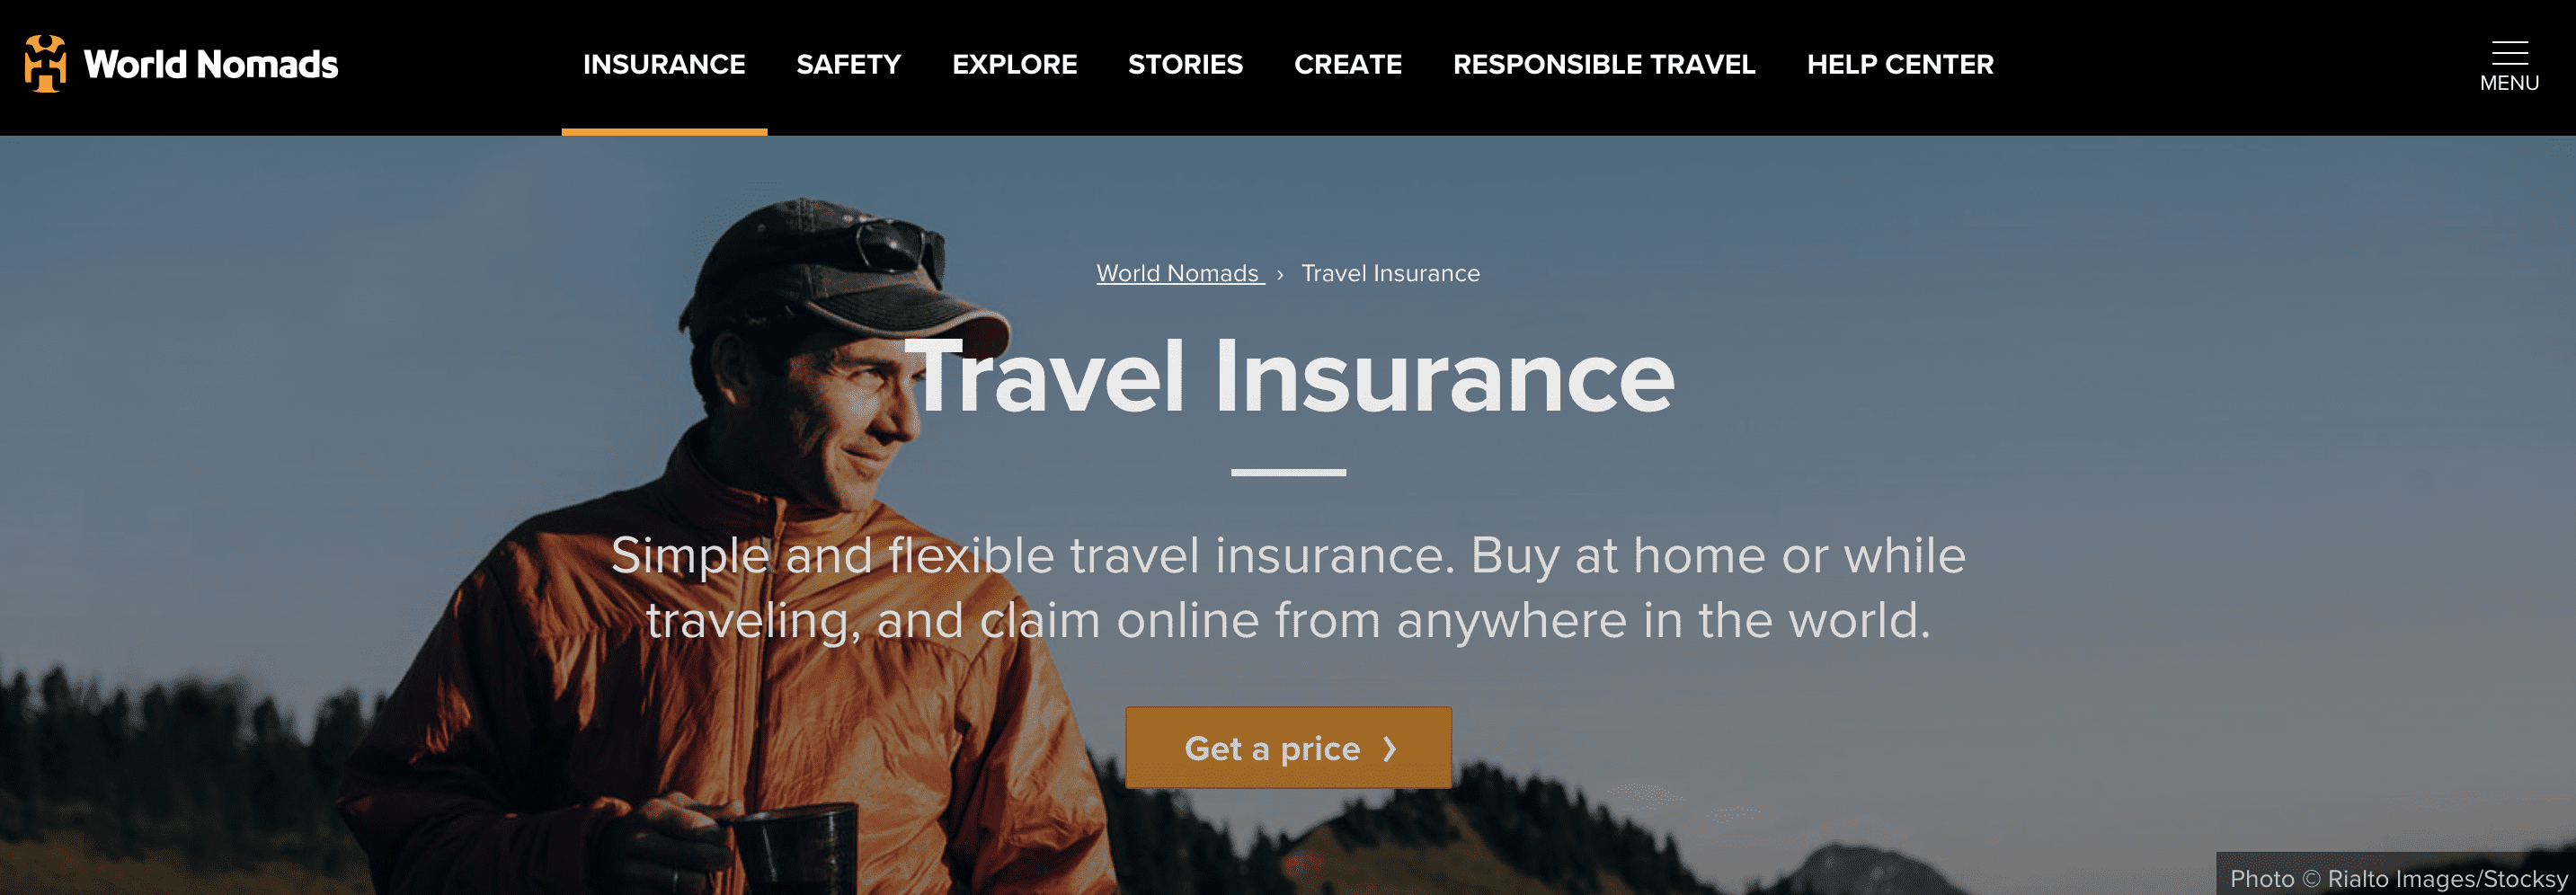 world nomads travel-insurance for digital nomads